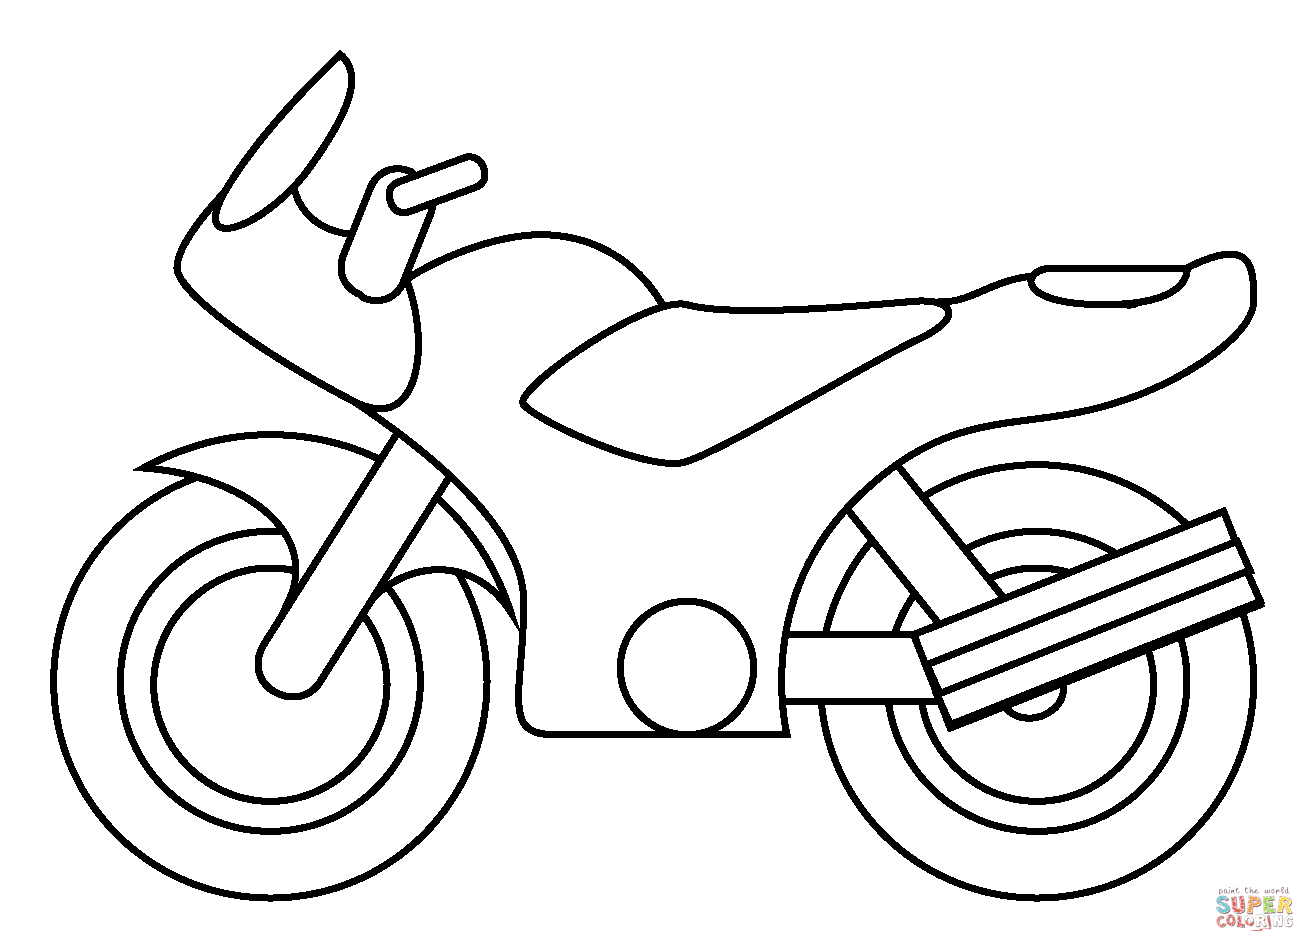 Motorcycle emoji coloring page free printable coloring pages